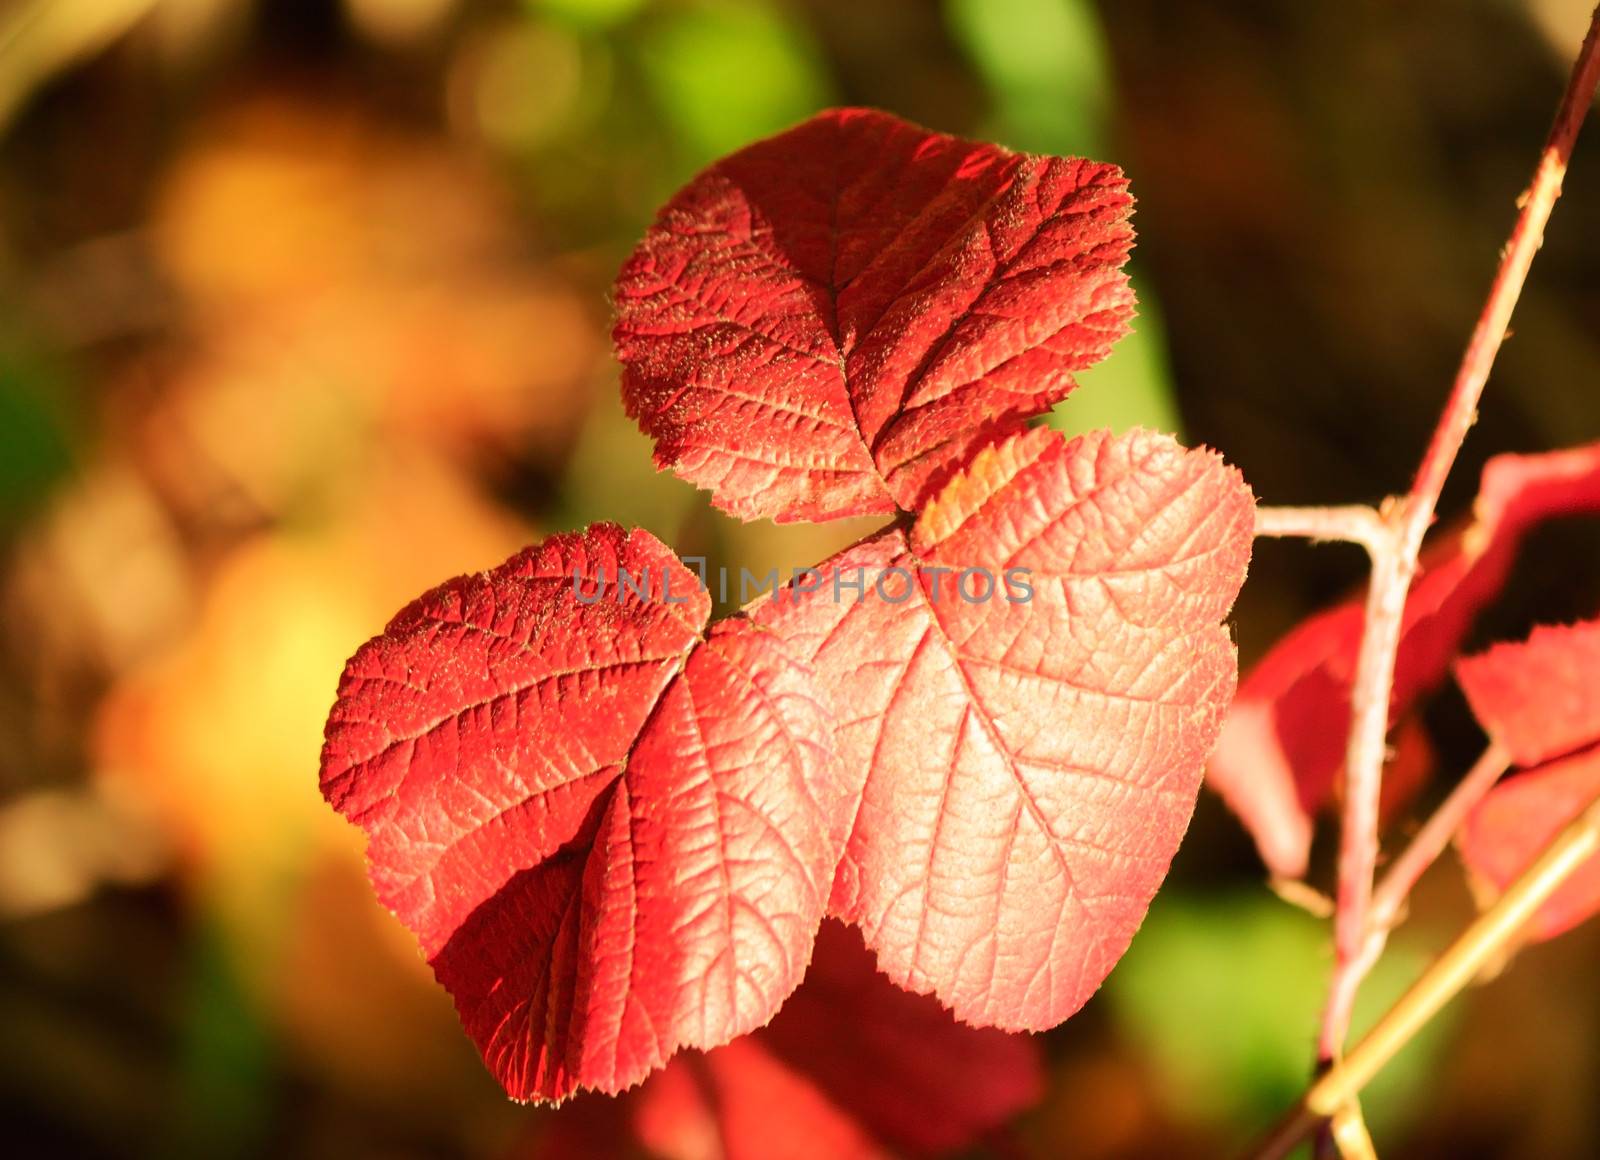 Autumn leaves Bush BlackBerry red, illuminated by the sun.